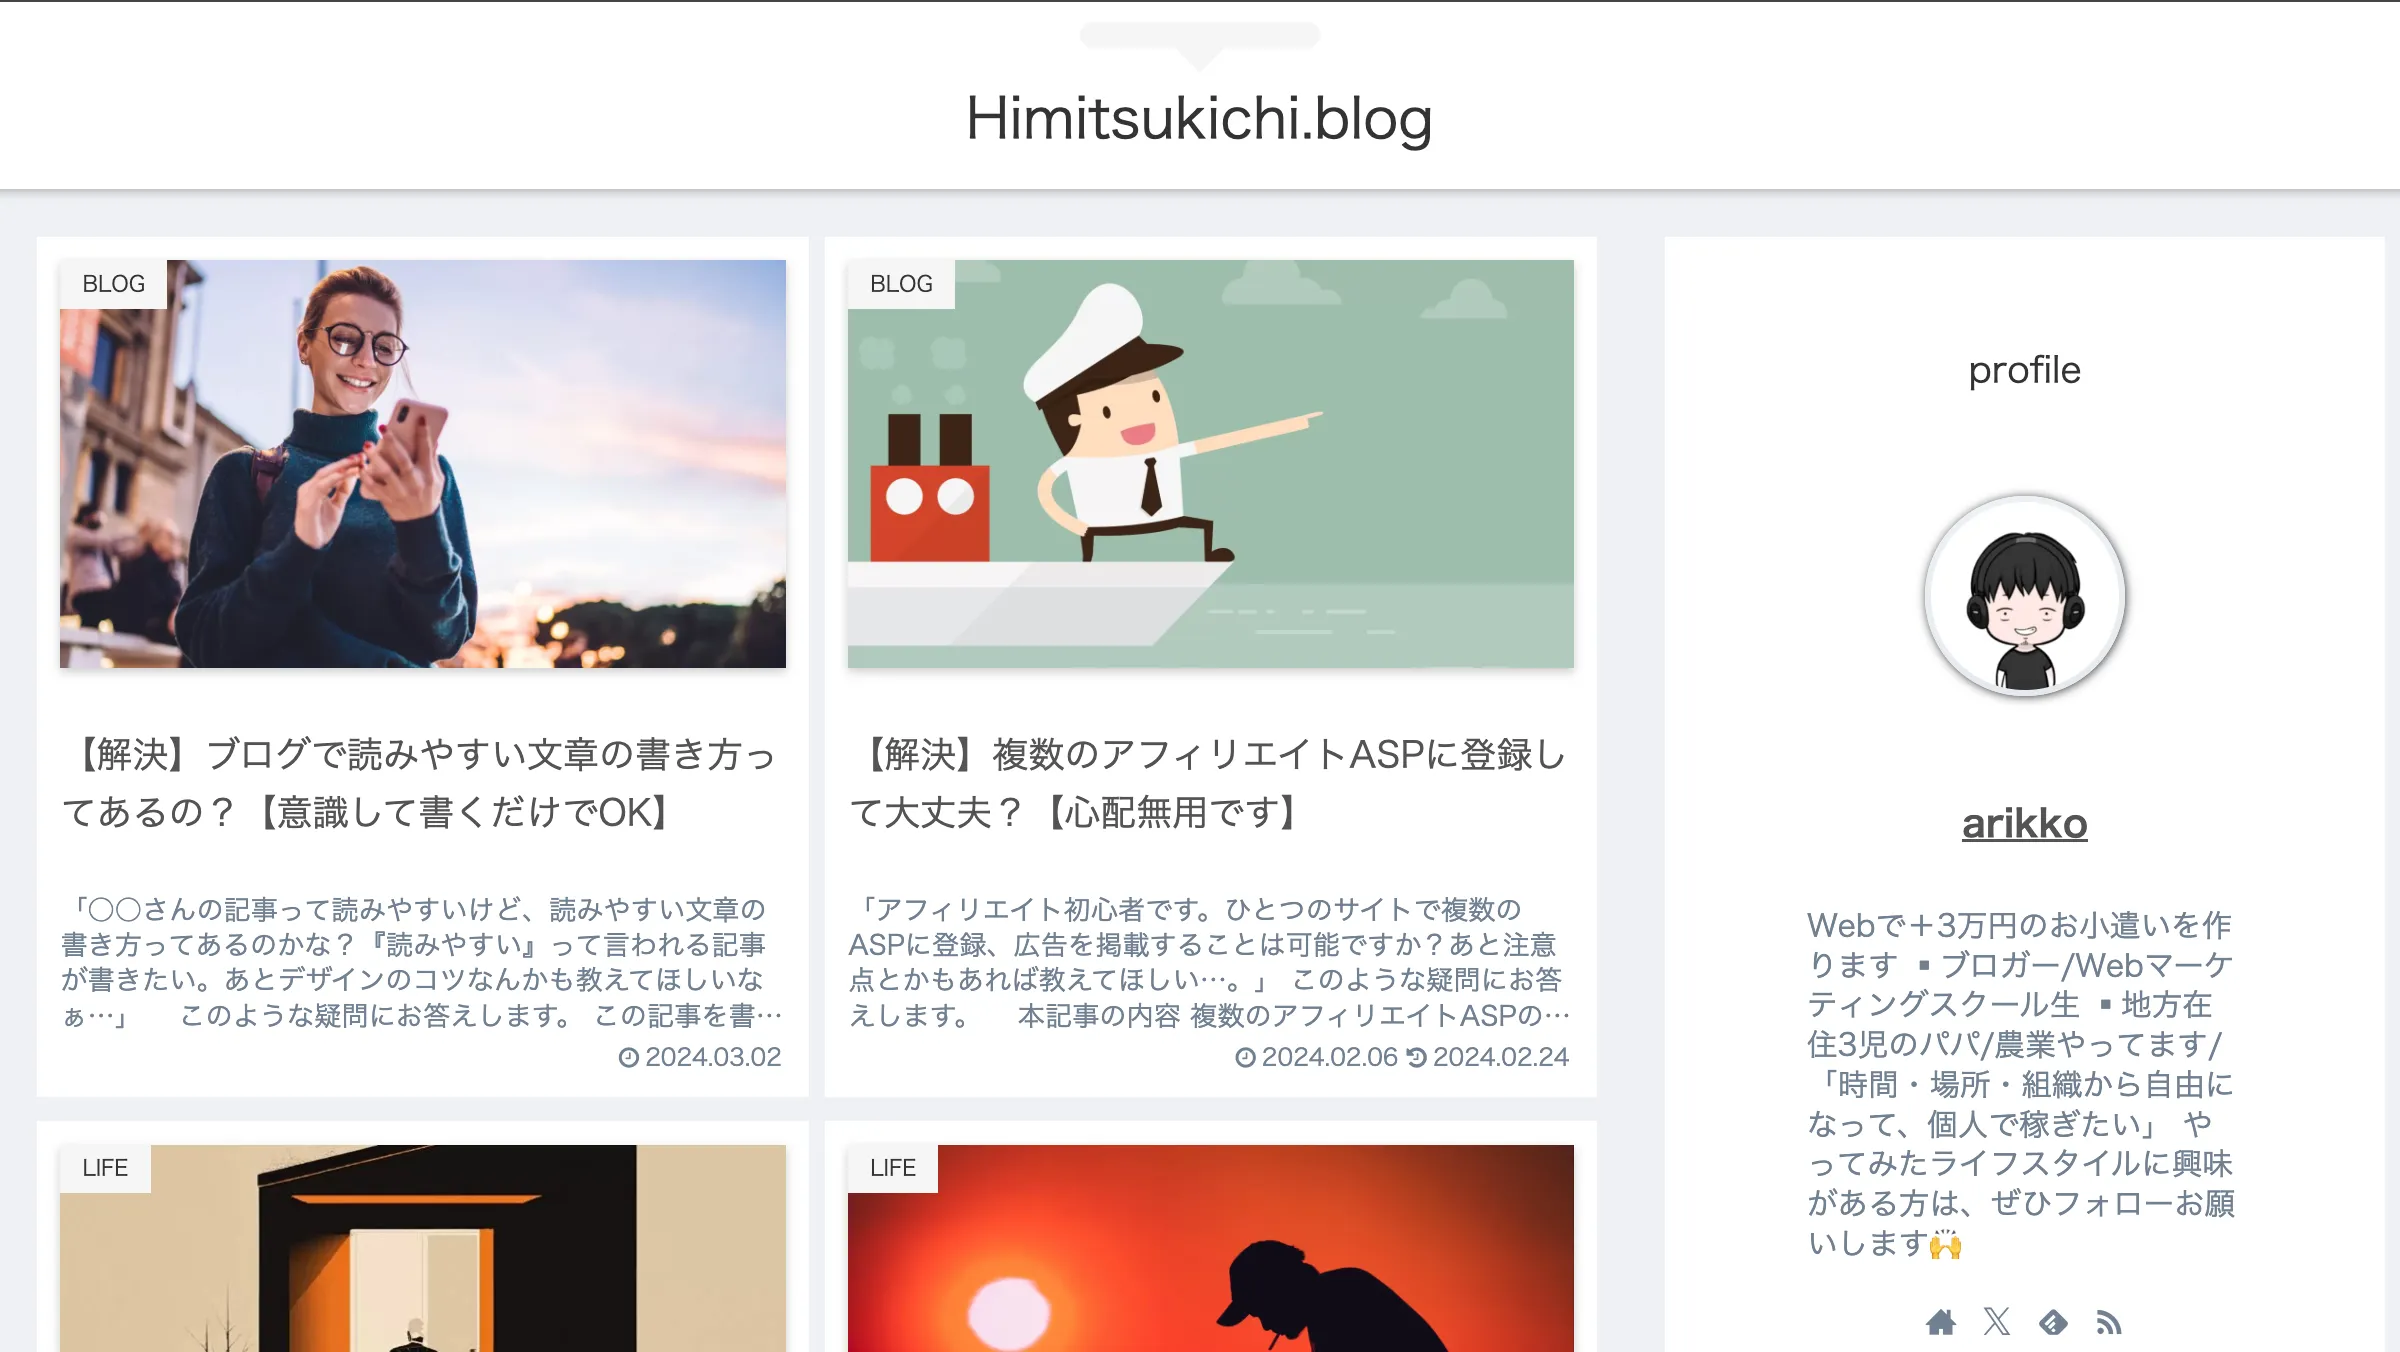 Himitsukichi.blog